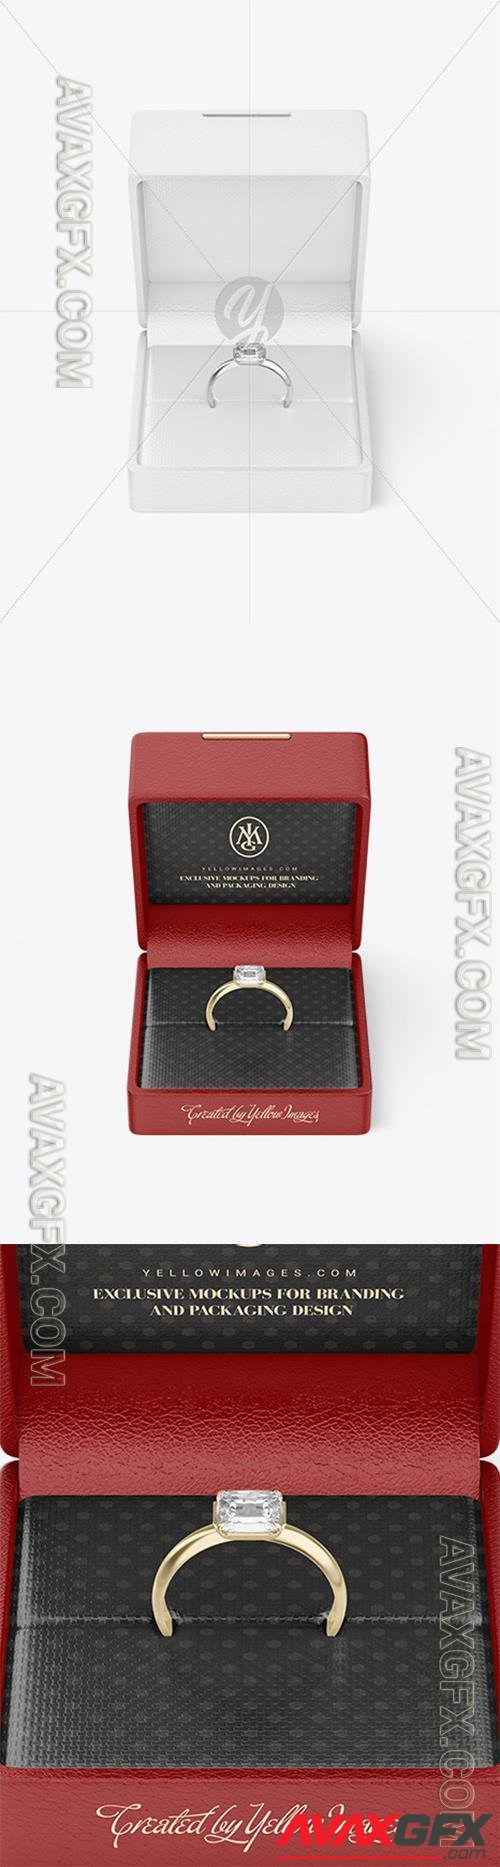 Jewelry Ring Case Mockup 94932 TIF